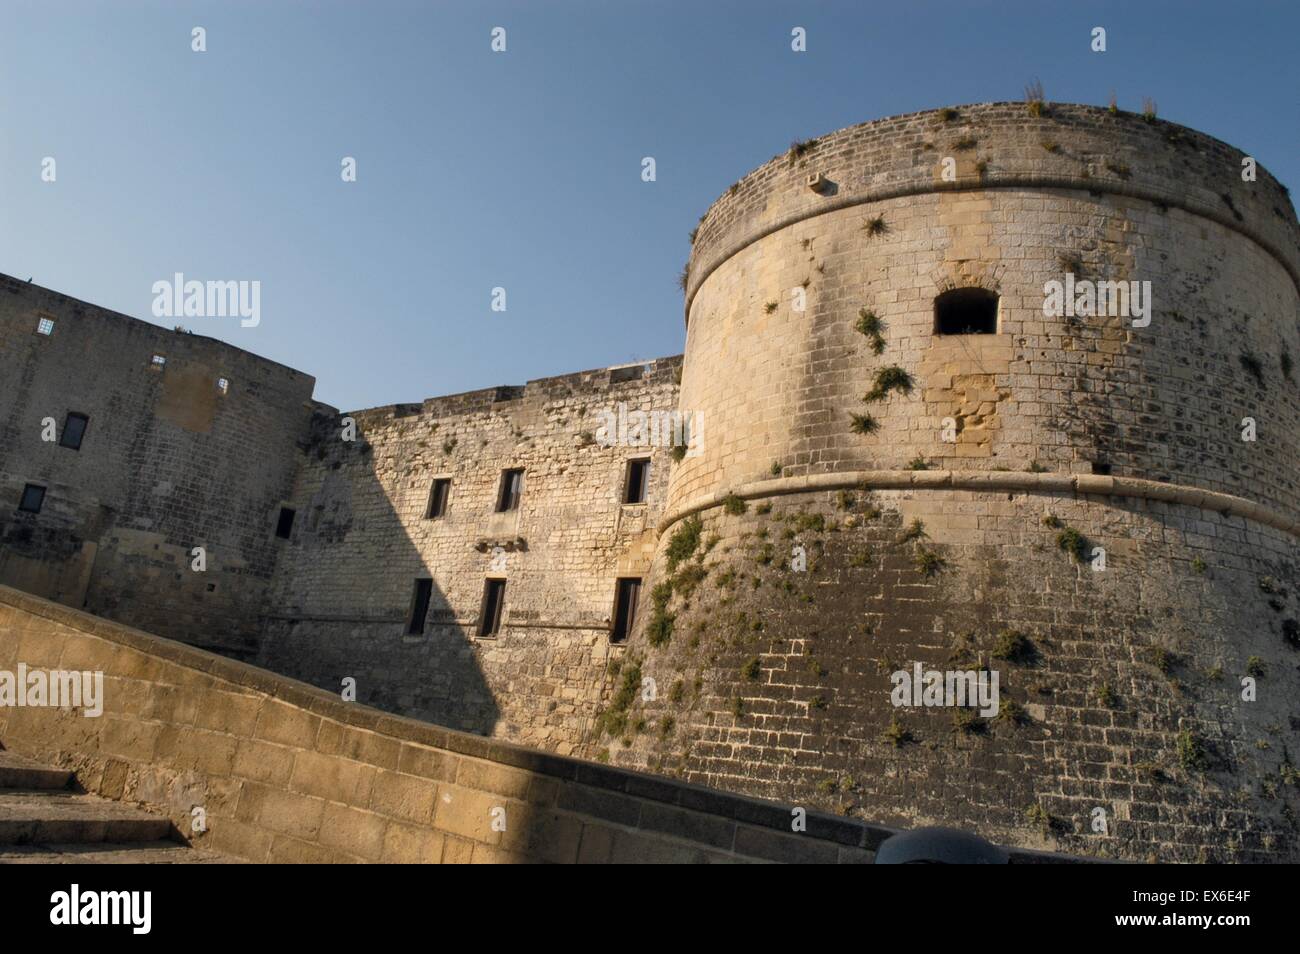 Italy, region Apulia, Otranto, the castle in ancient town Stock Photo